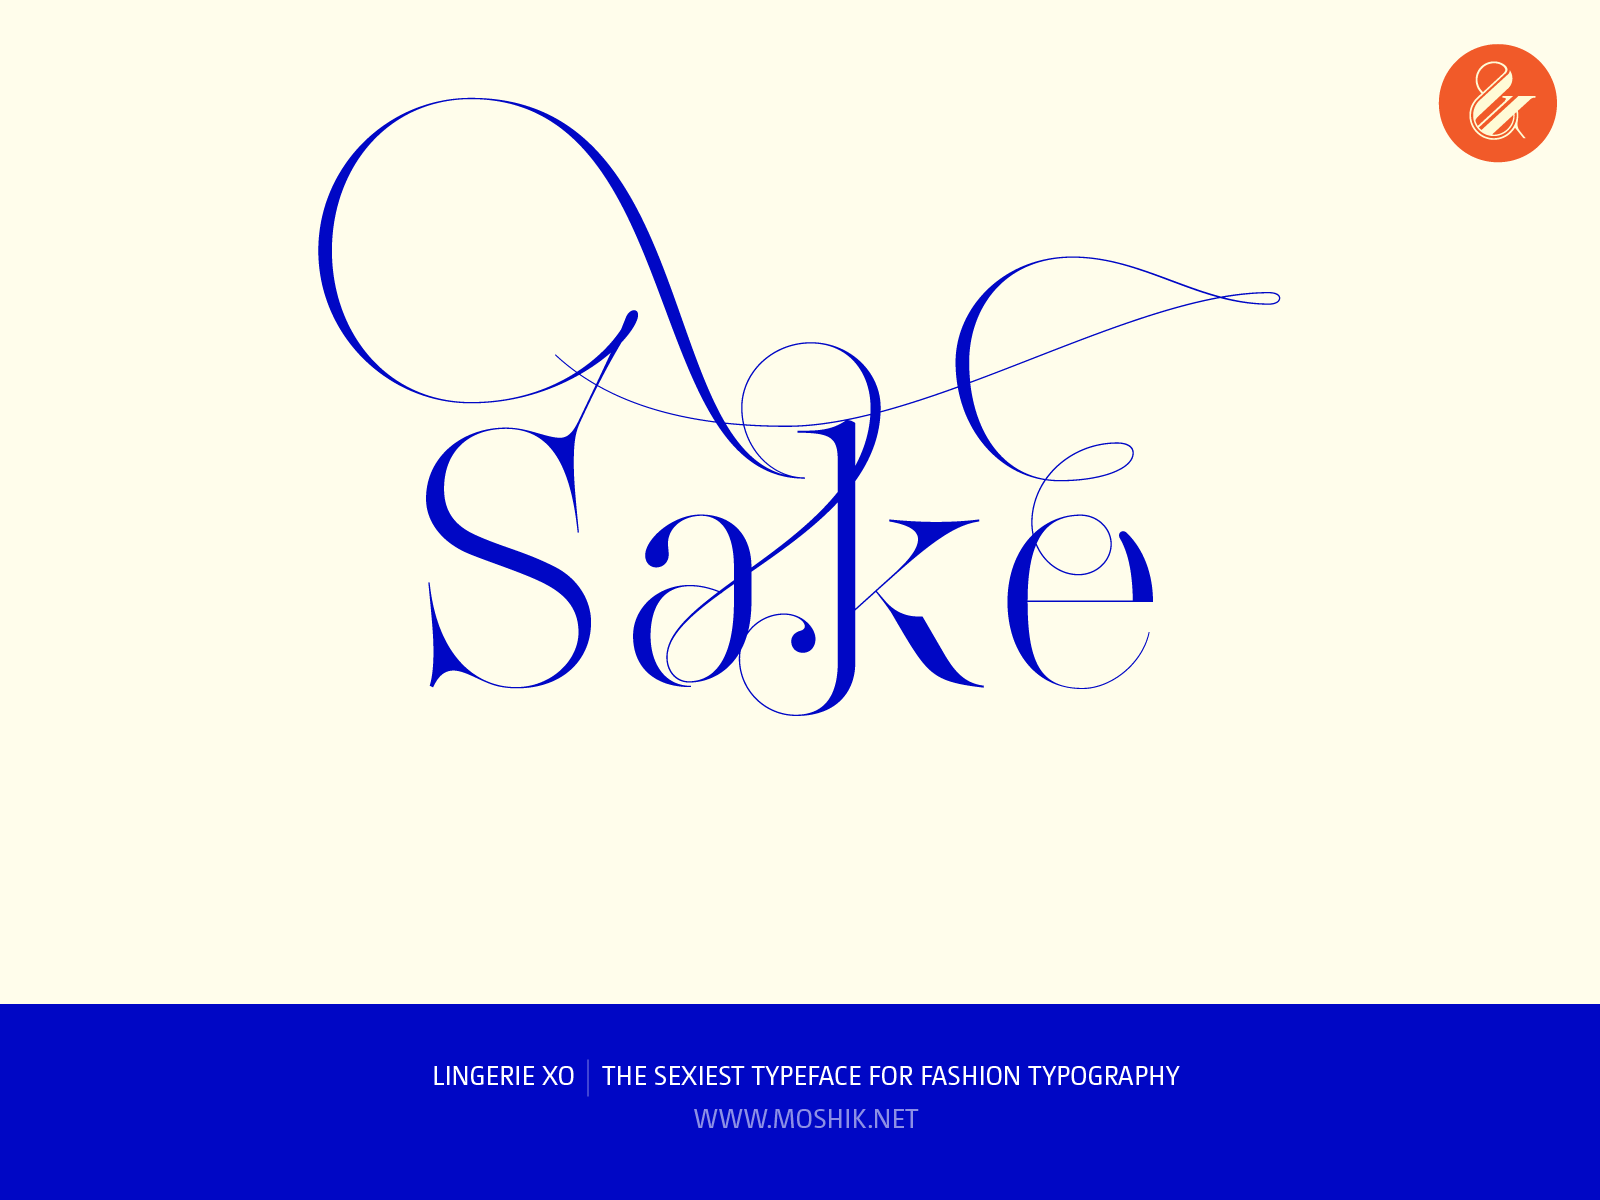 Sake logo, Lingerie XO Typeface, fashion fonts, best fonts 2021, best fonts for logos, sexy fonts, sexy logos, Vogue fonts, Moshik Nadav, Fashion magazine fonts, Must have fonts